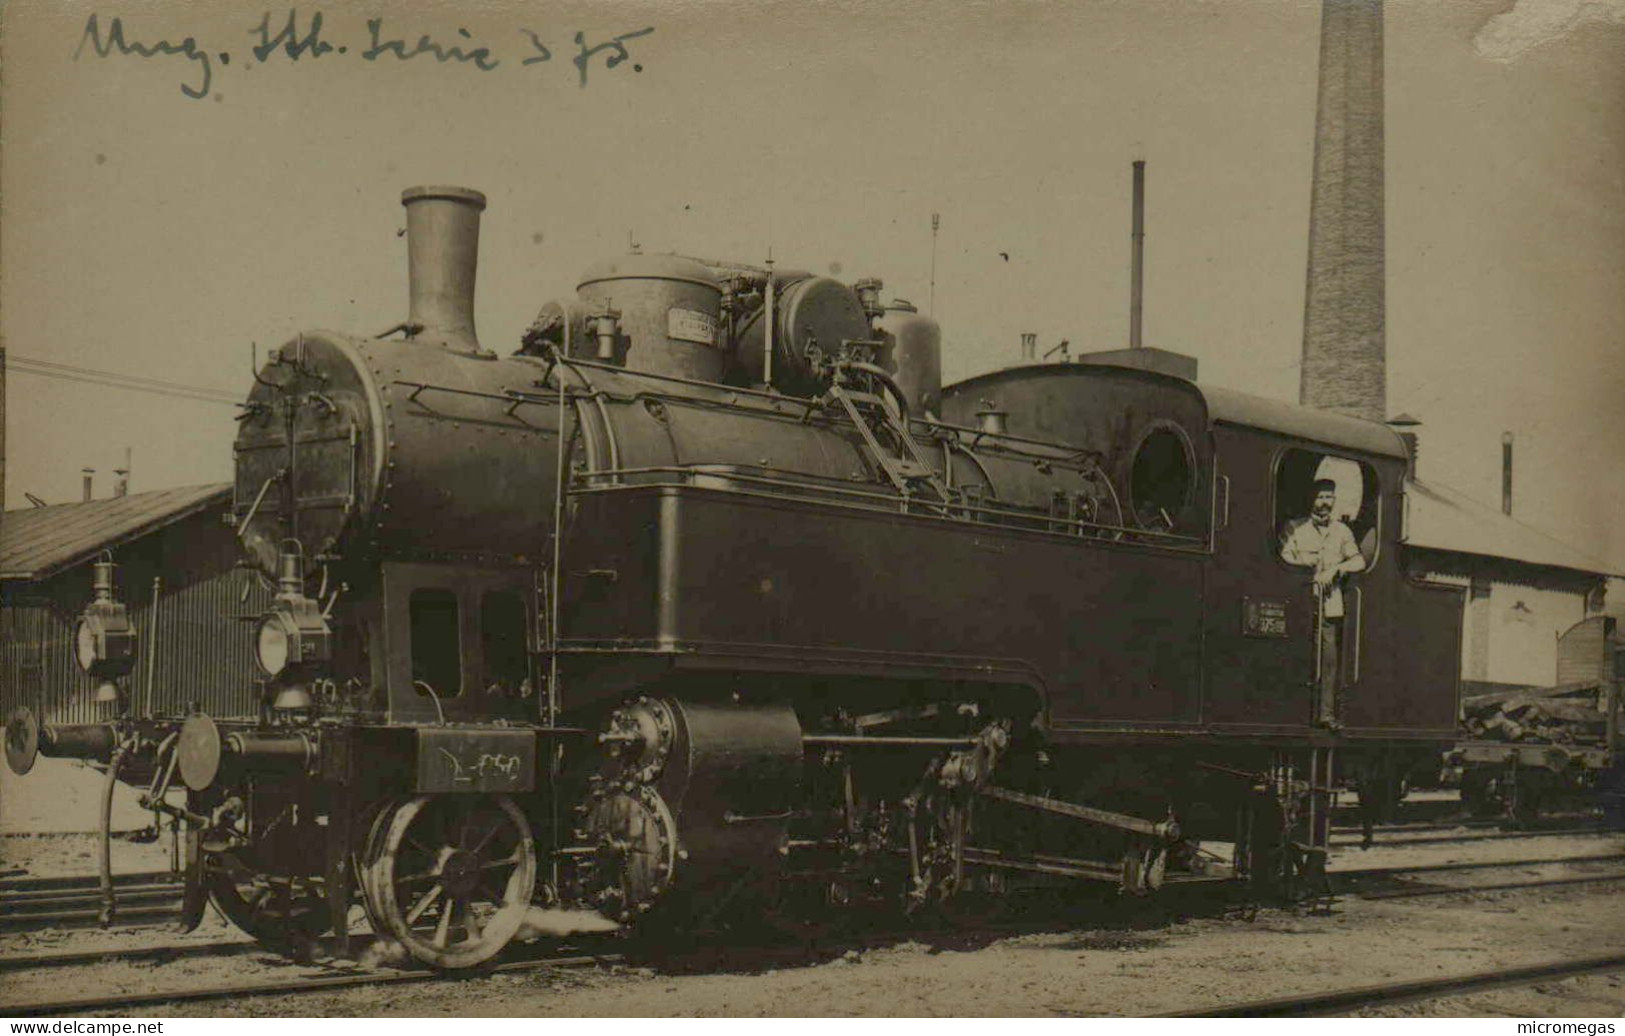 Hongrie - Ungarischen Staatsbahn Lokomotive Serie 375 - Petite écorchure Coin Sup. Droit - Eisenbahnen